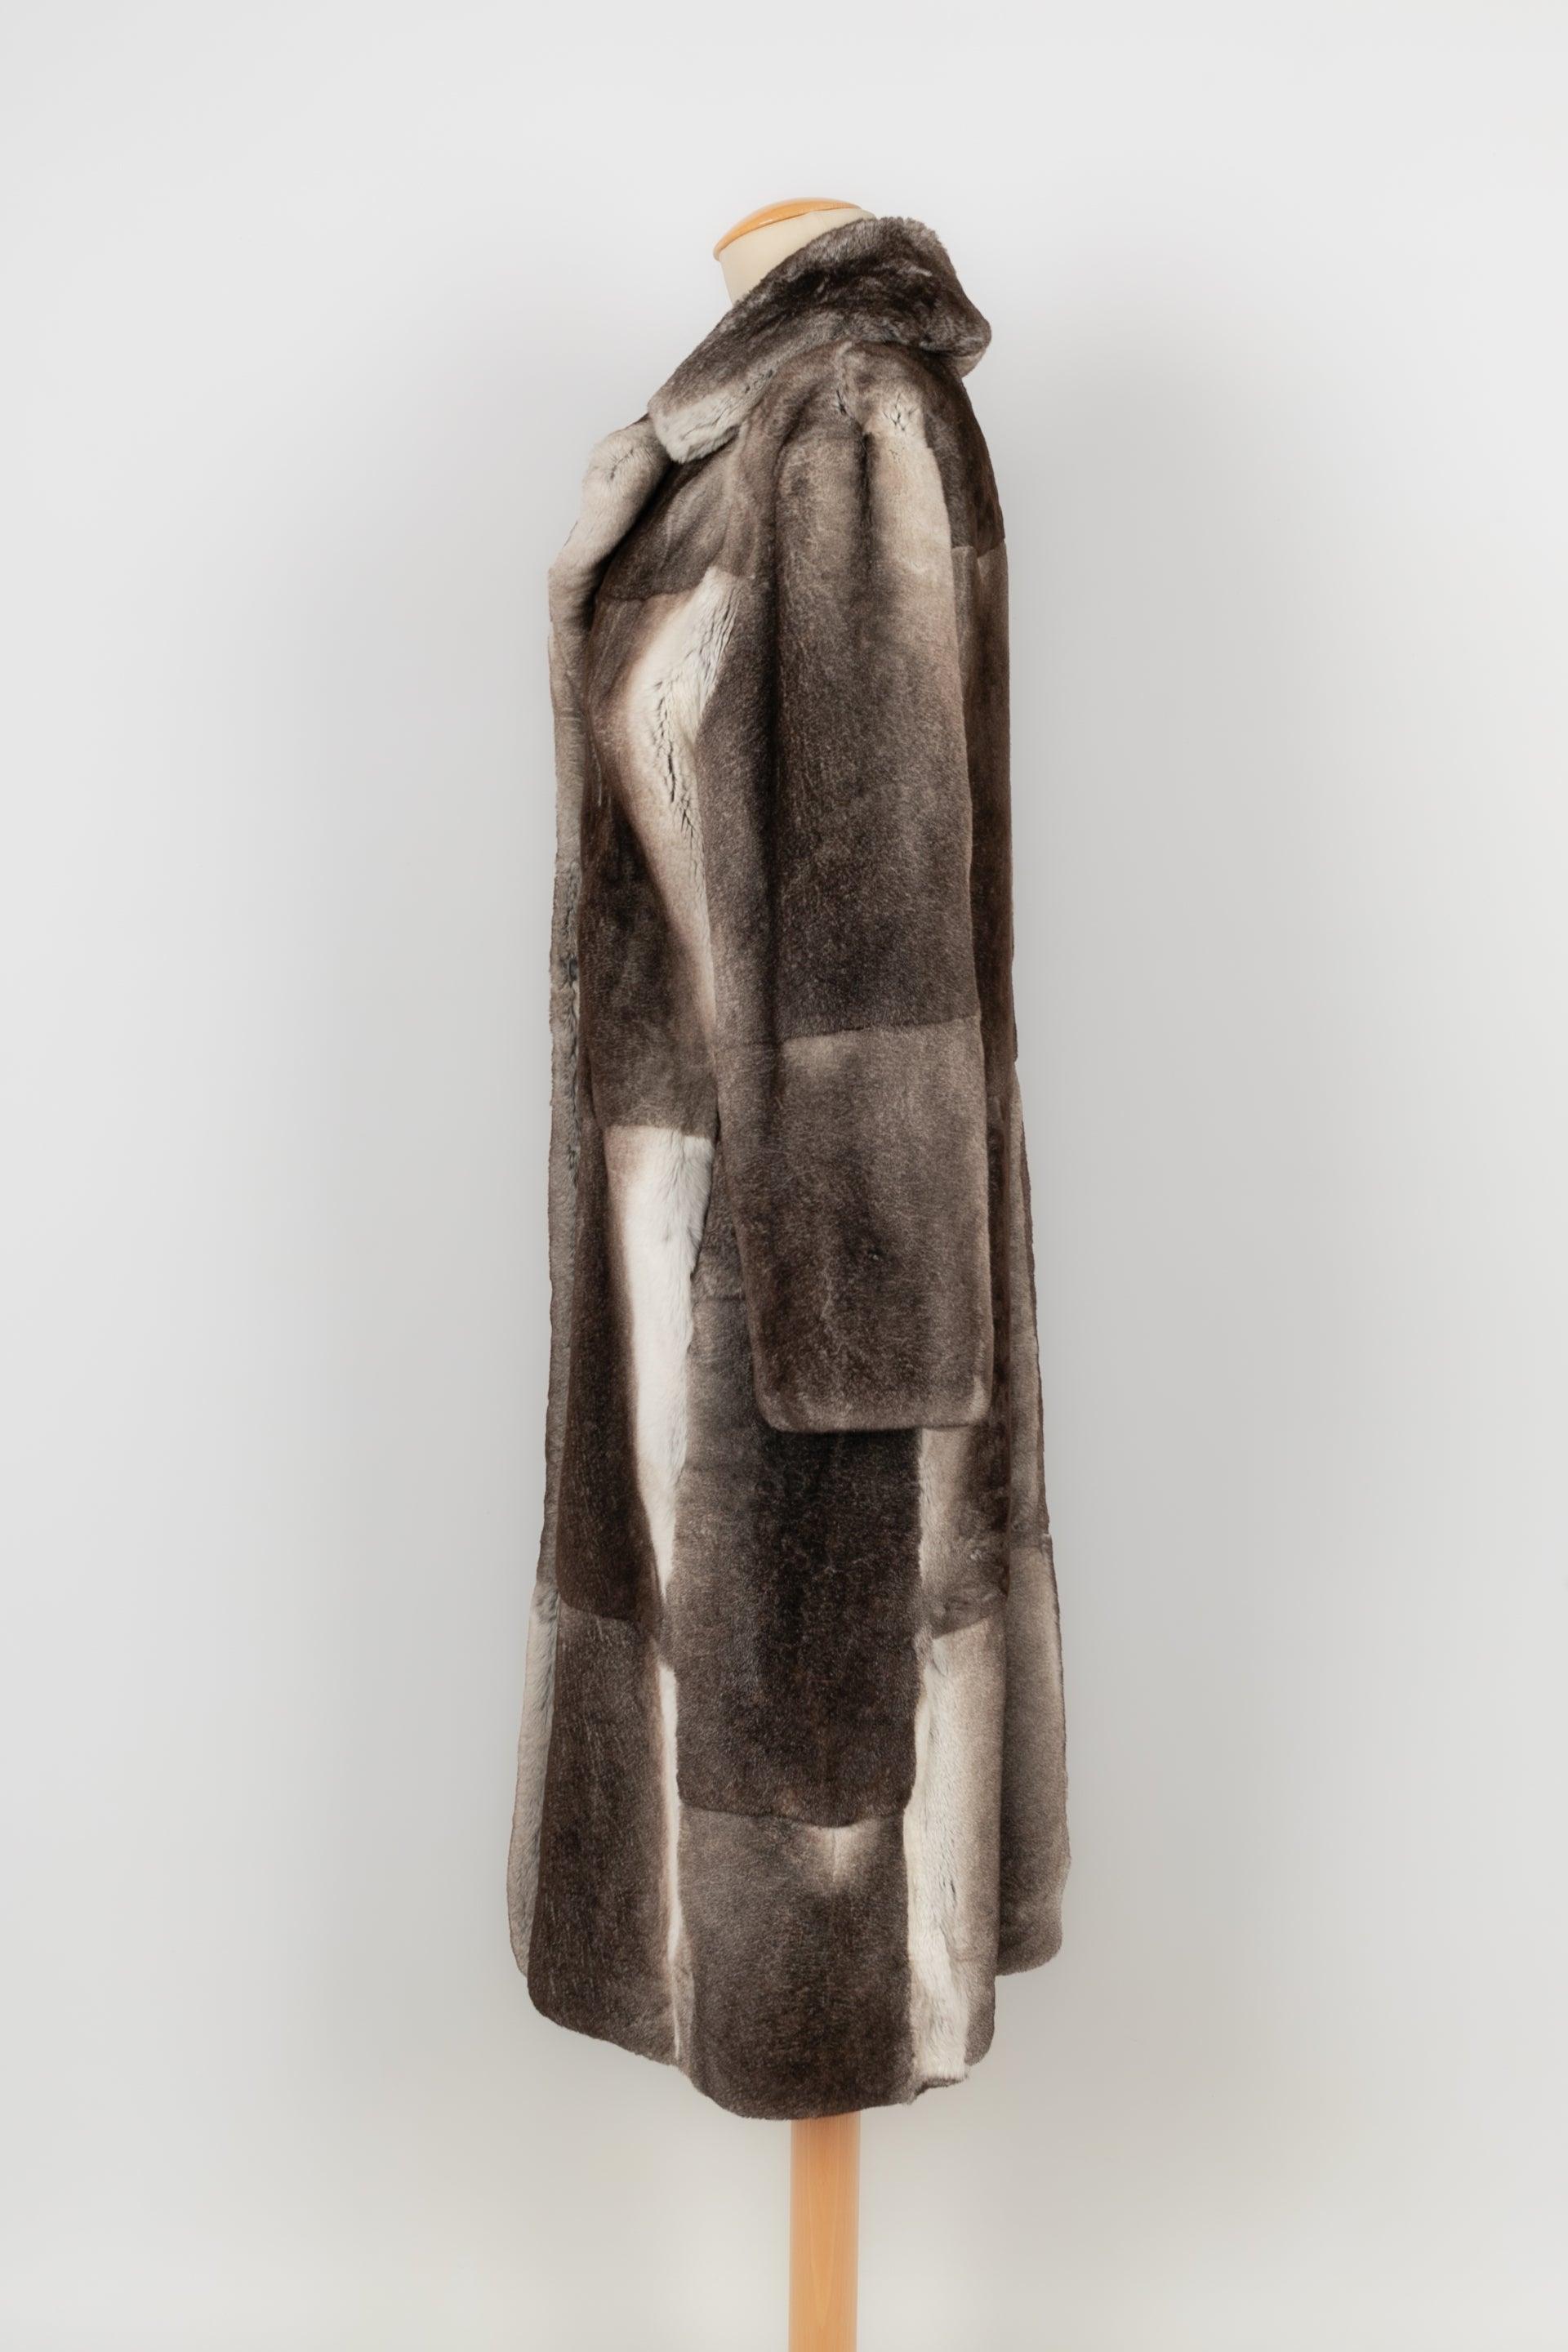 Women's Christian Dior Orylag Fur Coat, 2002